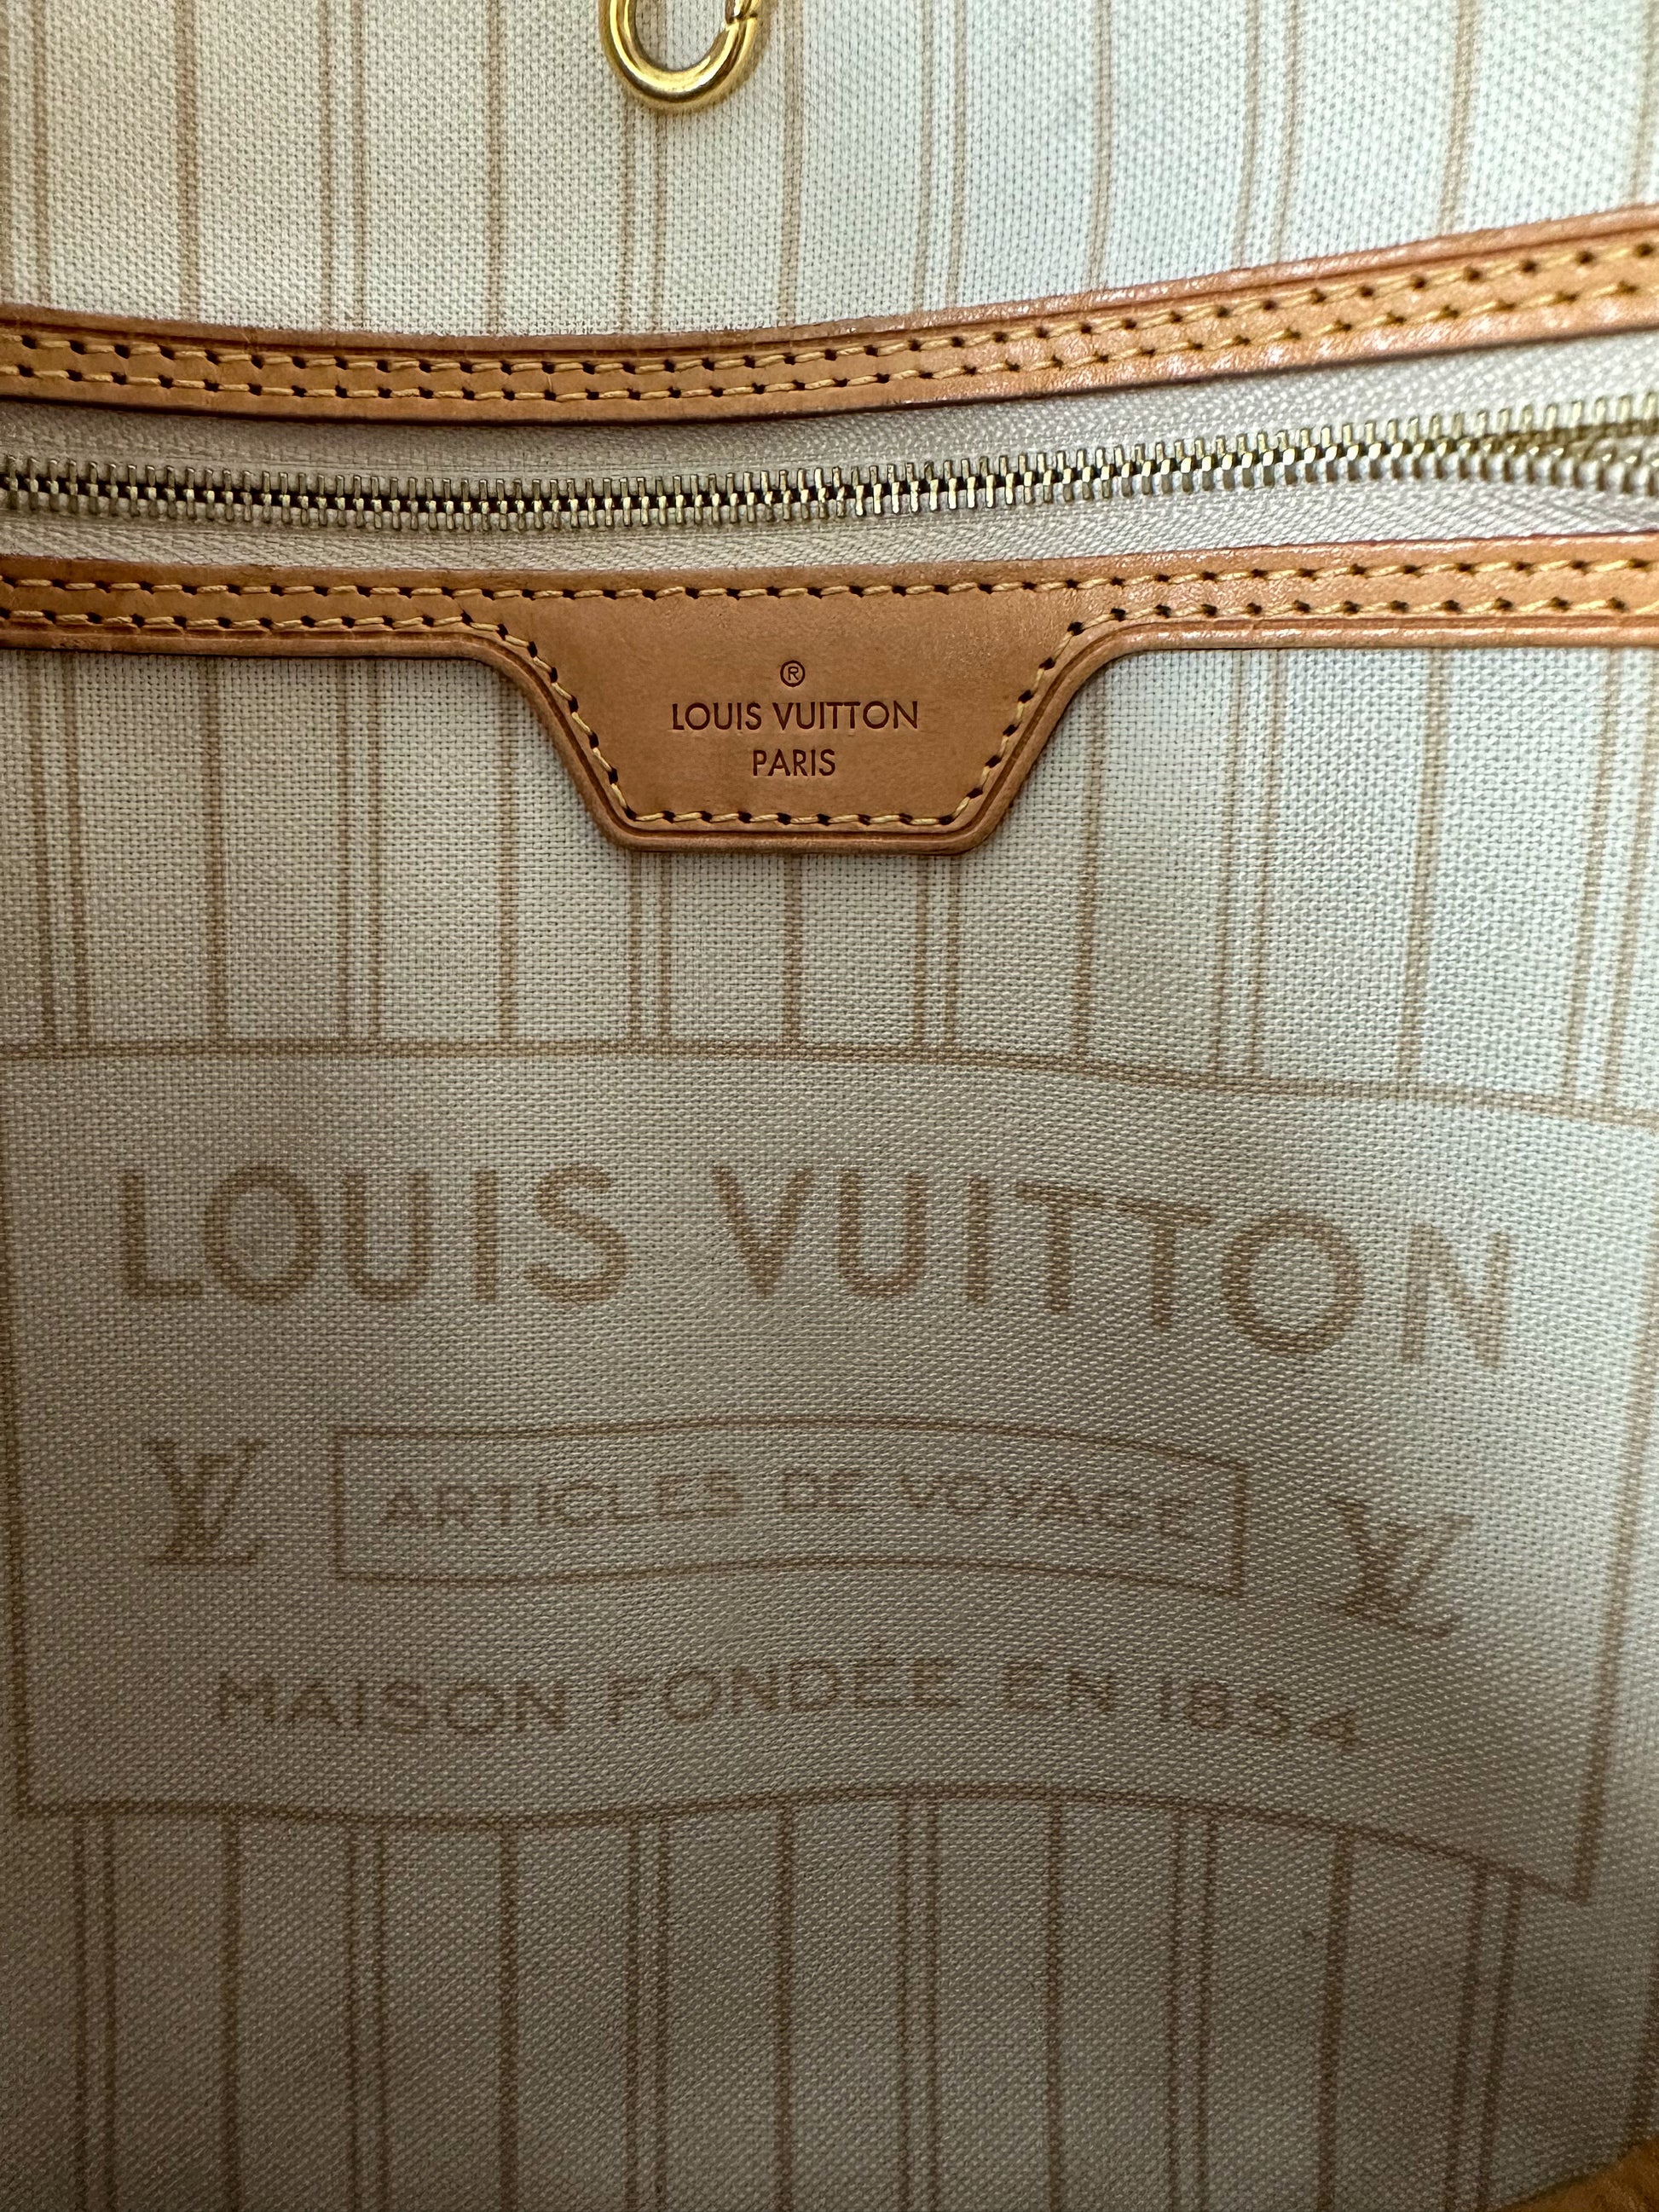 LOUIS VUITTON NEVERFULL MM Damier Azur Tote bag White Beige No.994